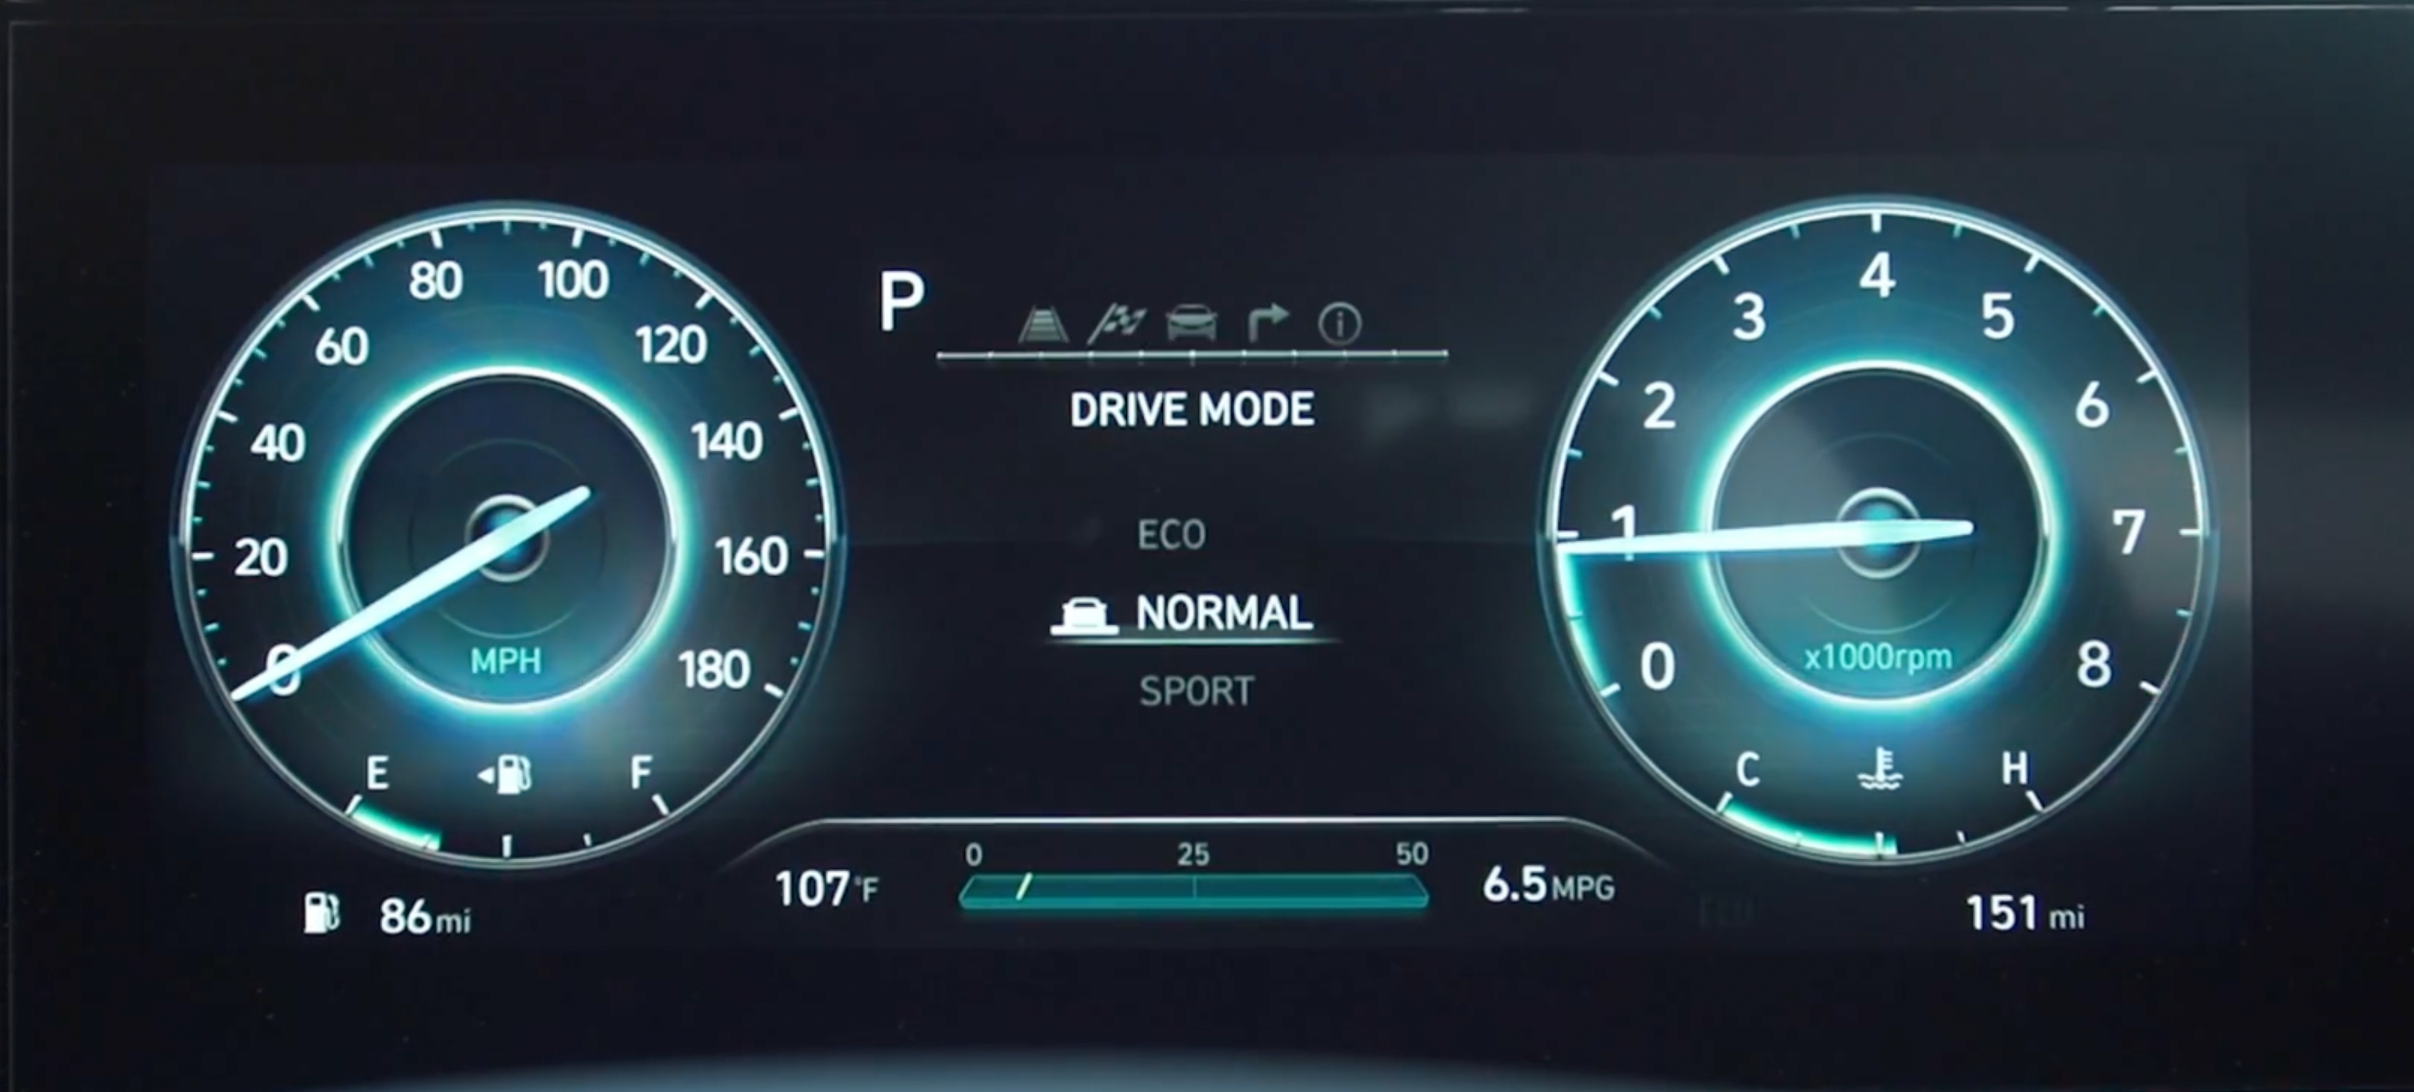 Hyundai Elantra N Drive Modes